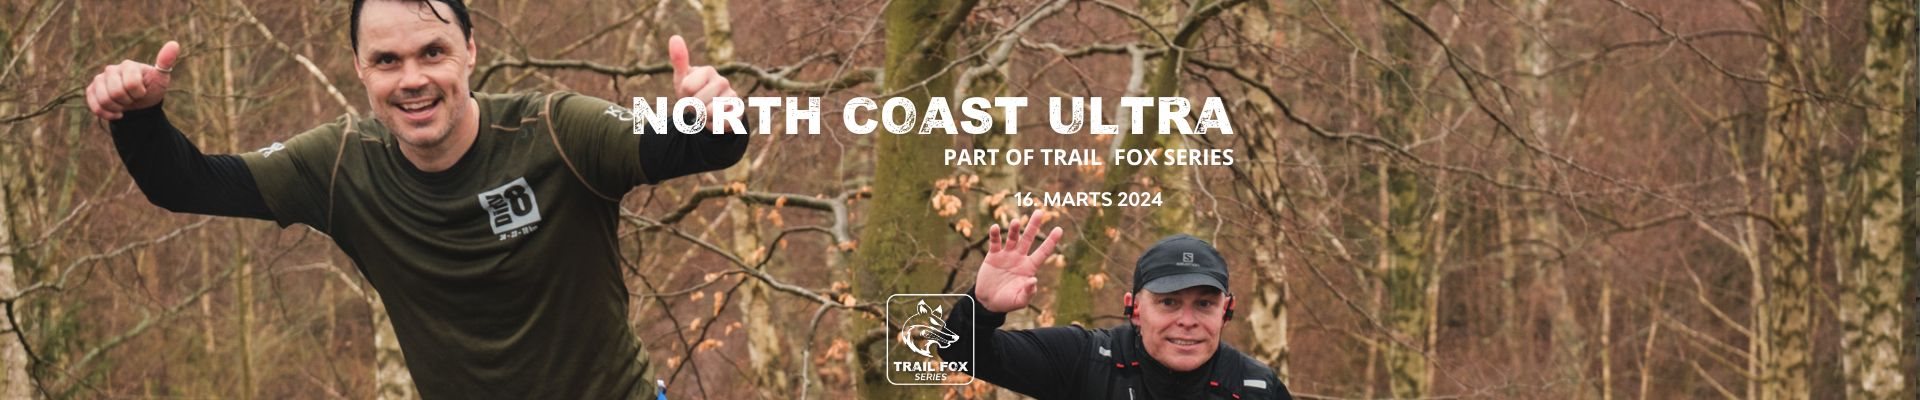 North Coast Ultra Tisvilde 2024 - Part of Trail Fox Series